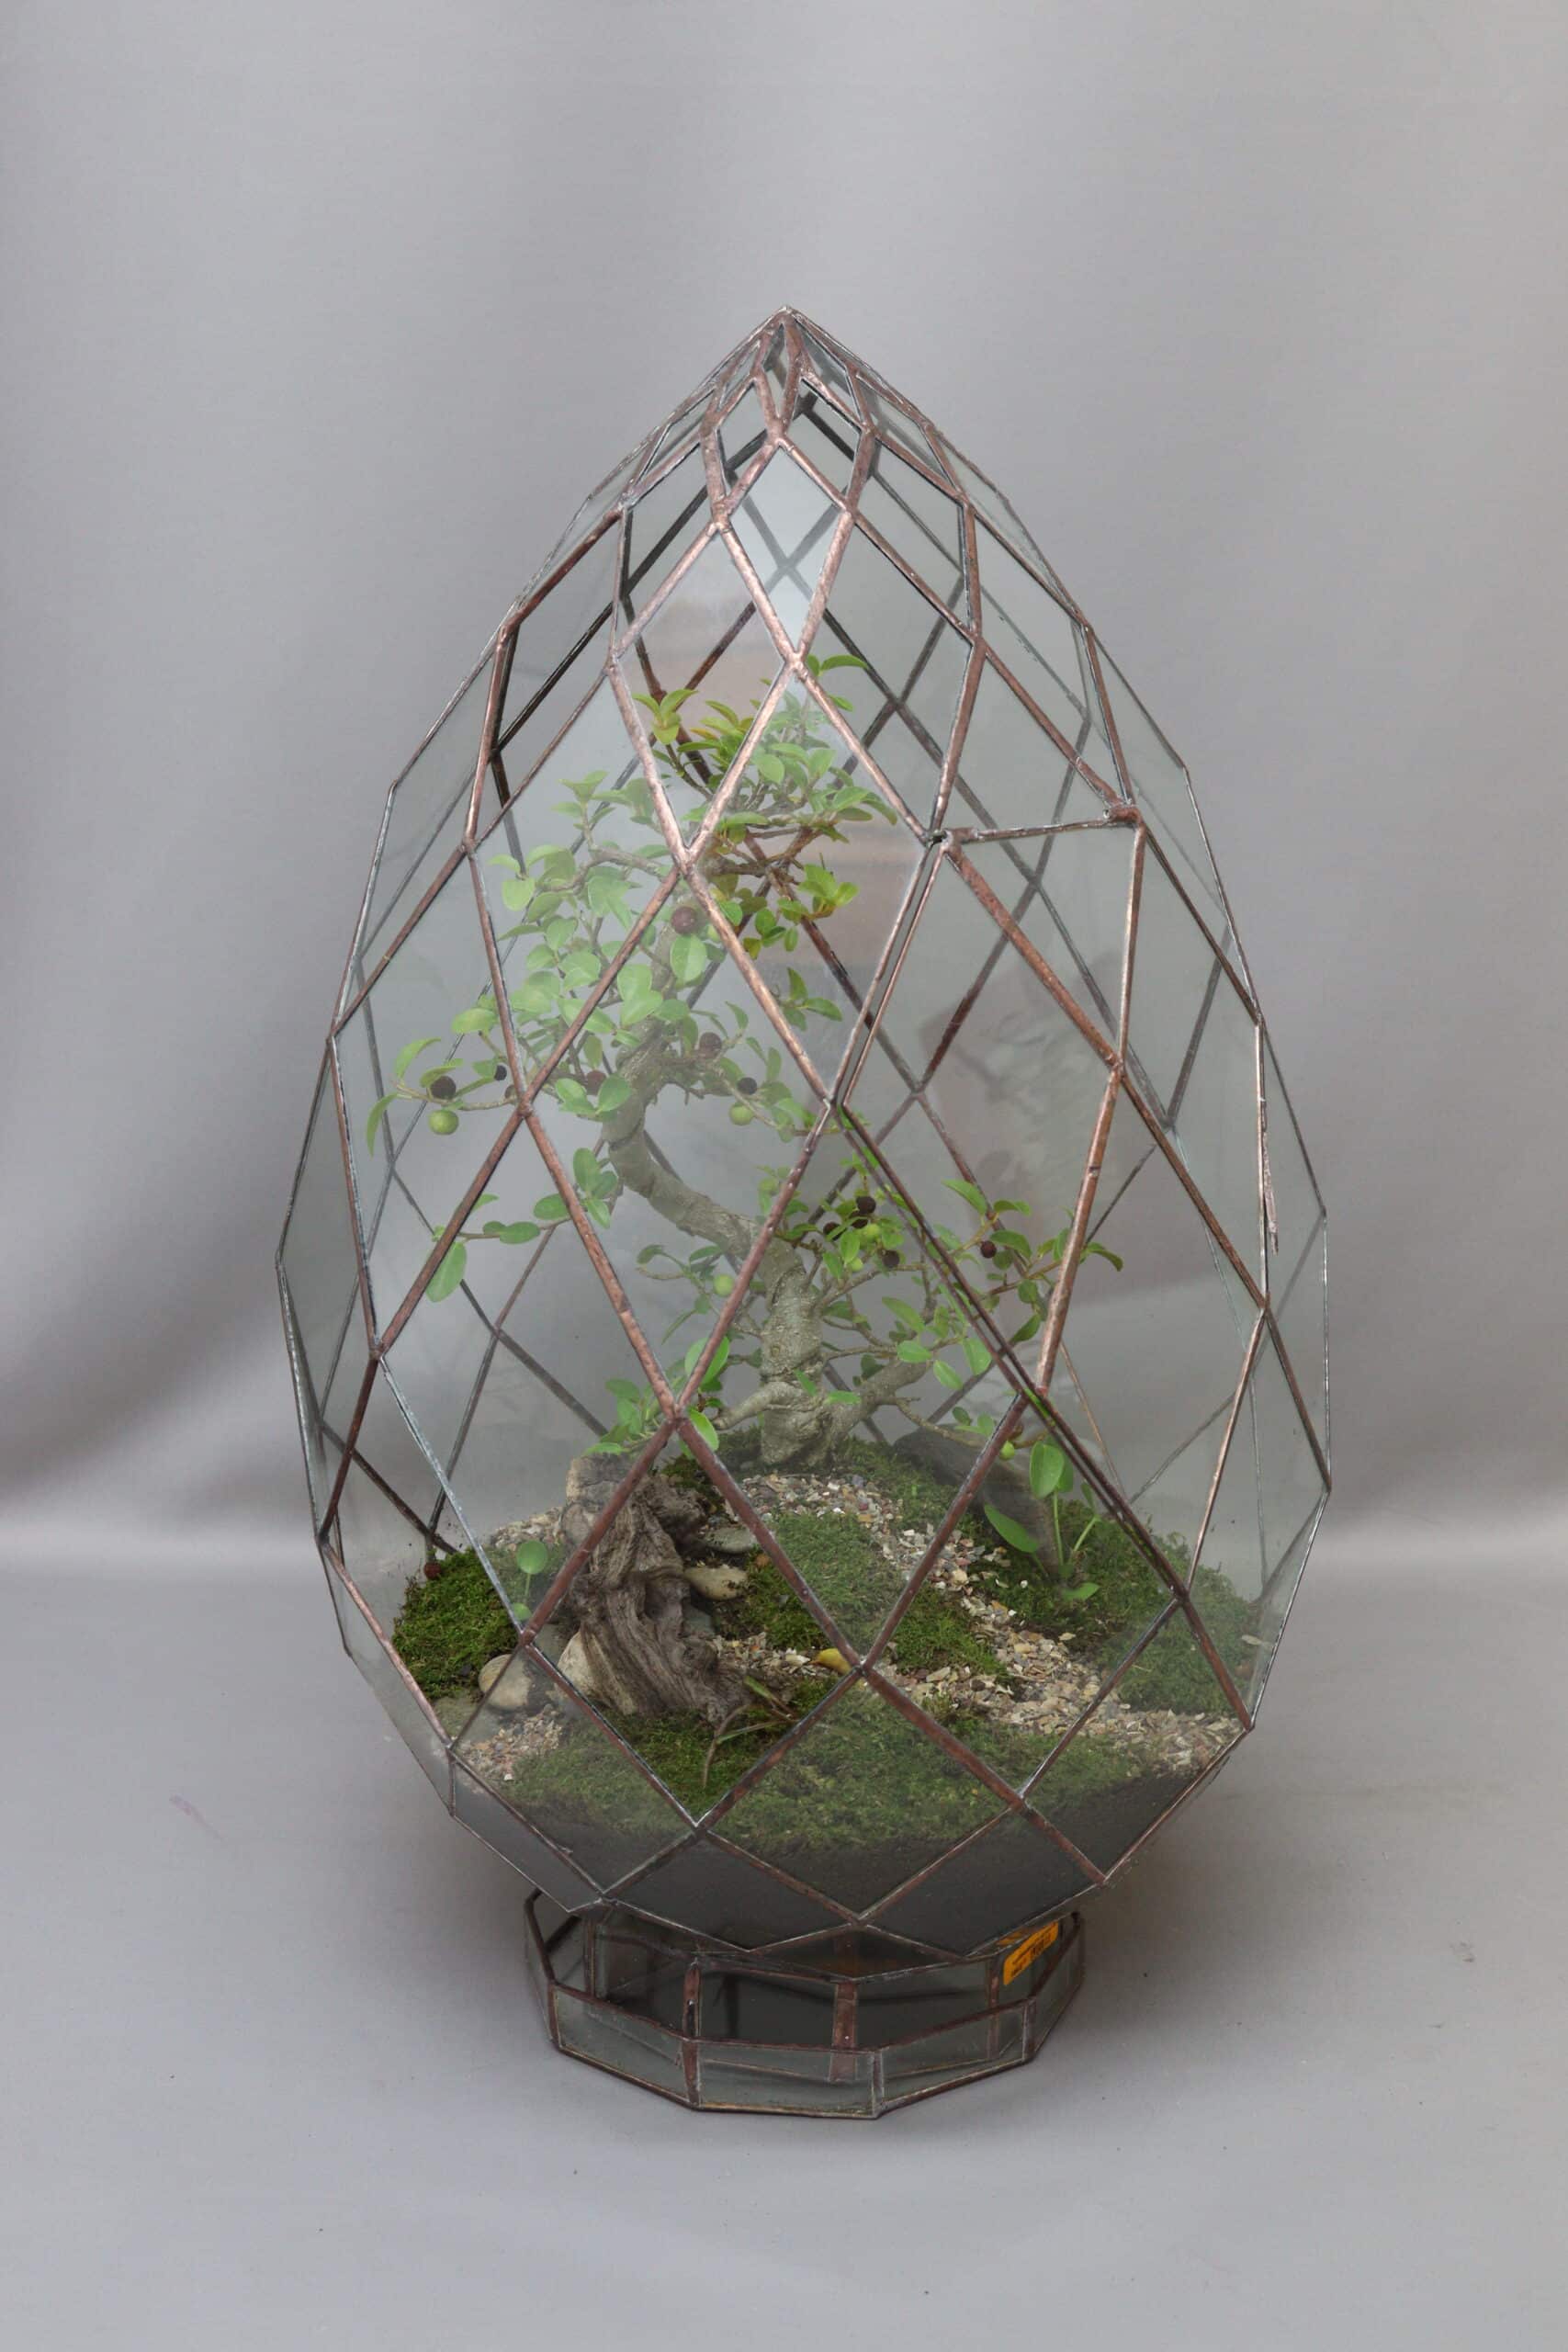 A medium egg-shaped glass terrarium planter with a small bonsai inside, against a plain grey background.